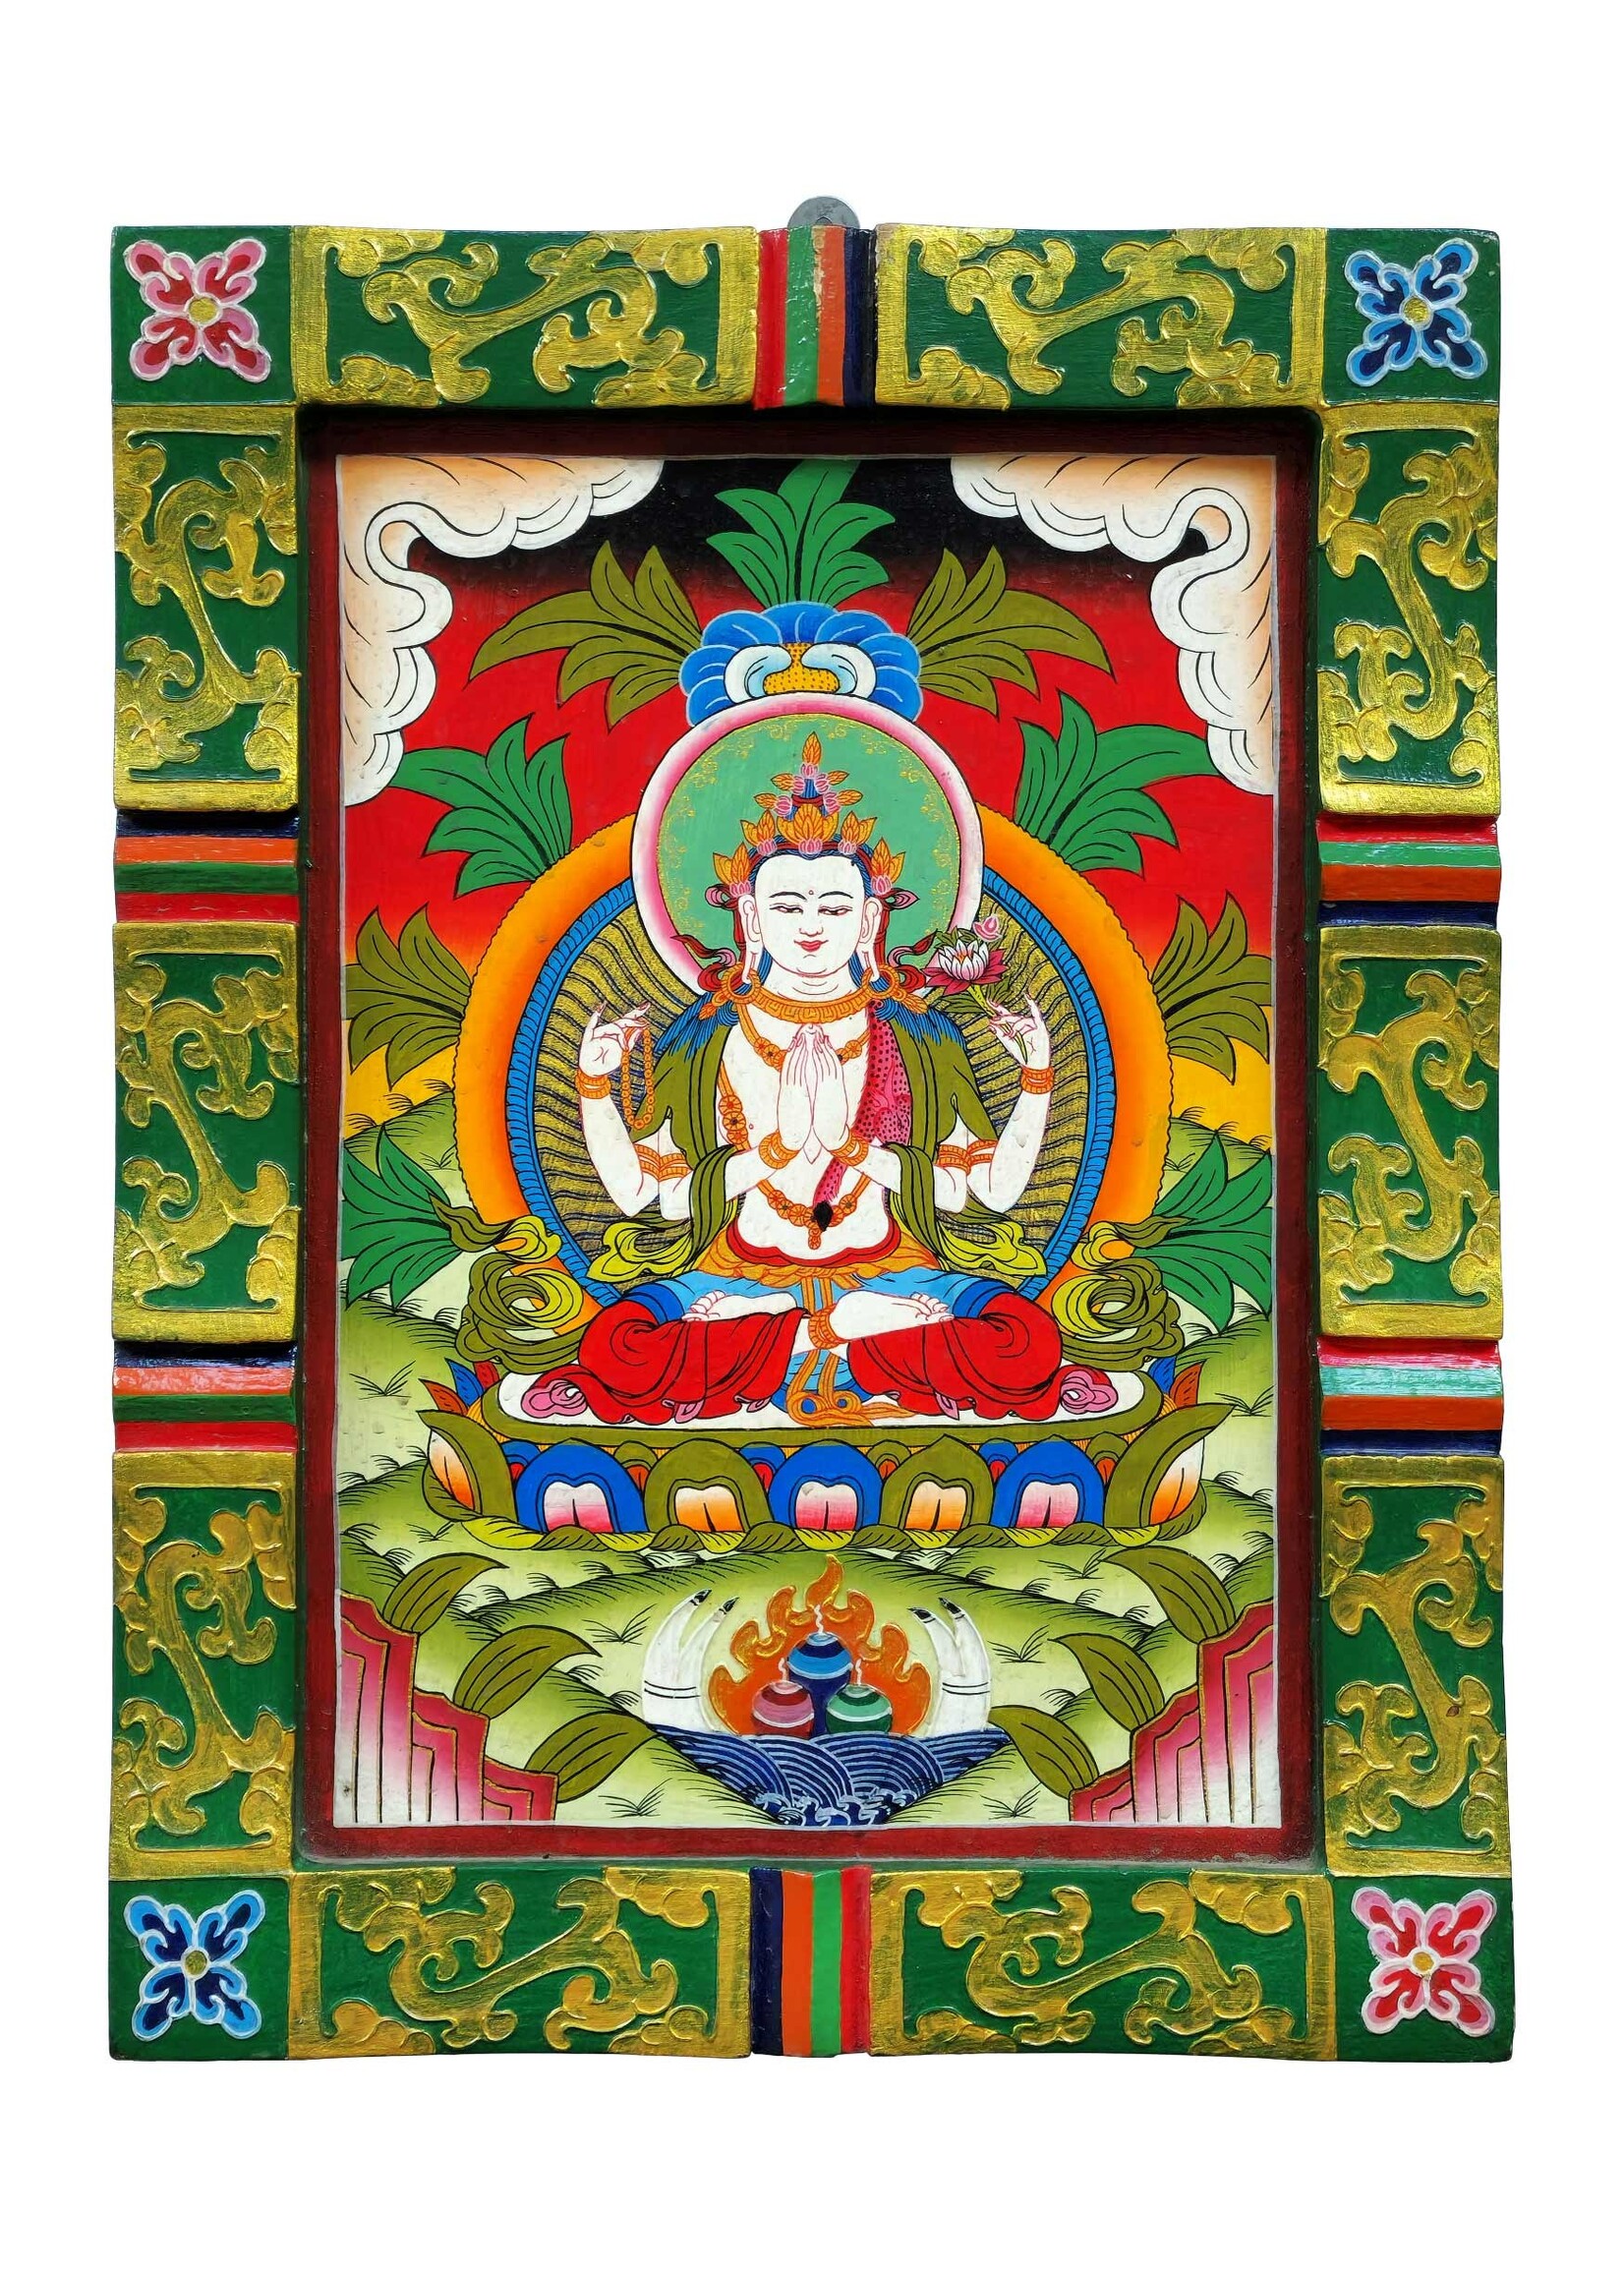 Tenture murale en bois tibétain Chenrezig (Avalokiteshvara) peinte à la main